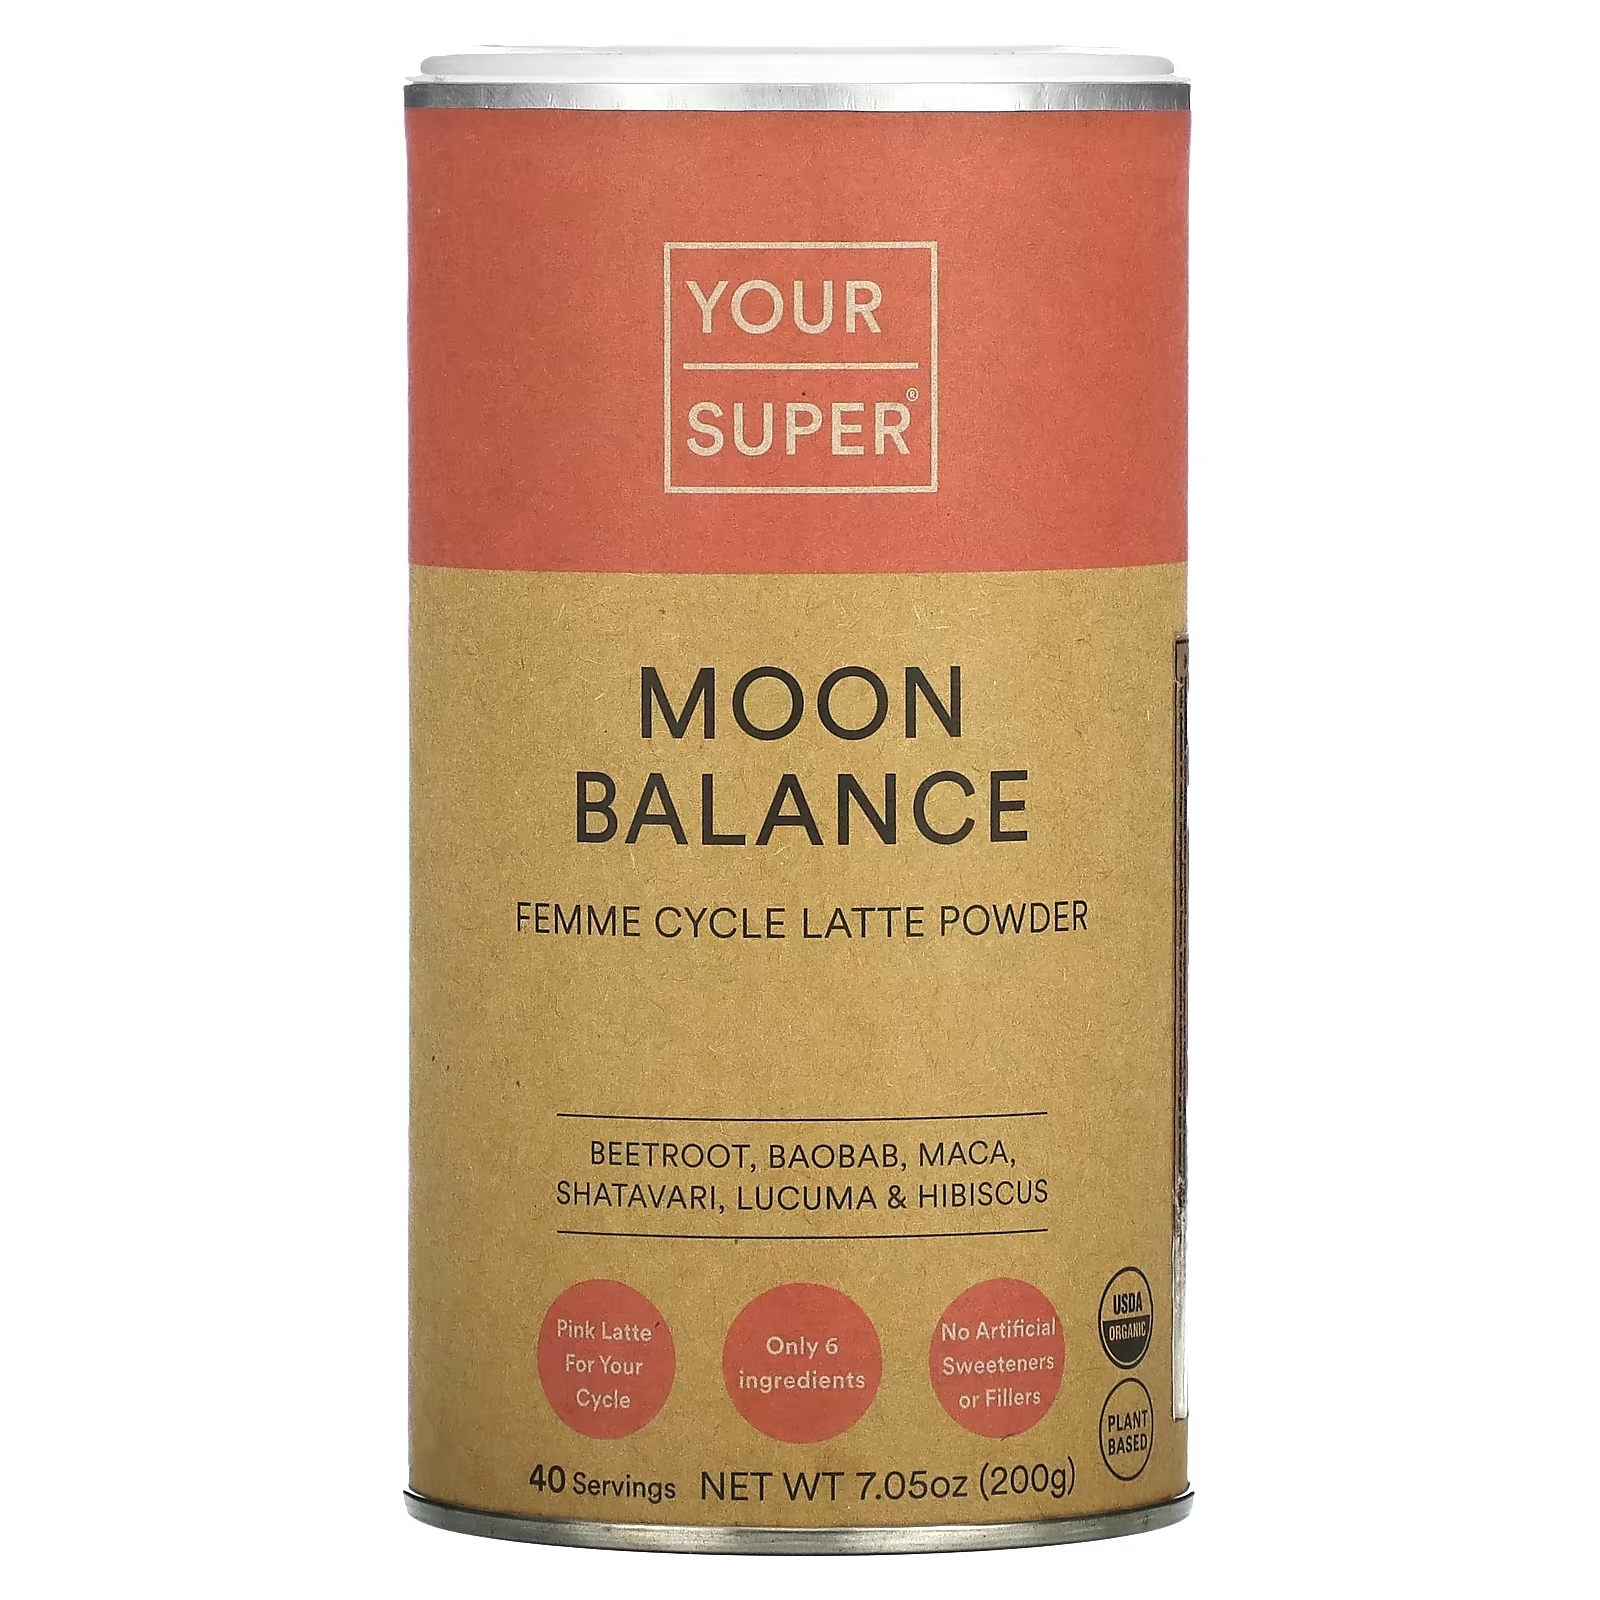 Порошок для Латте Femme Cycle Your Super Moon Balance, 200 г